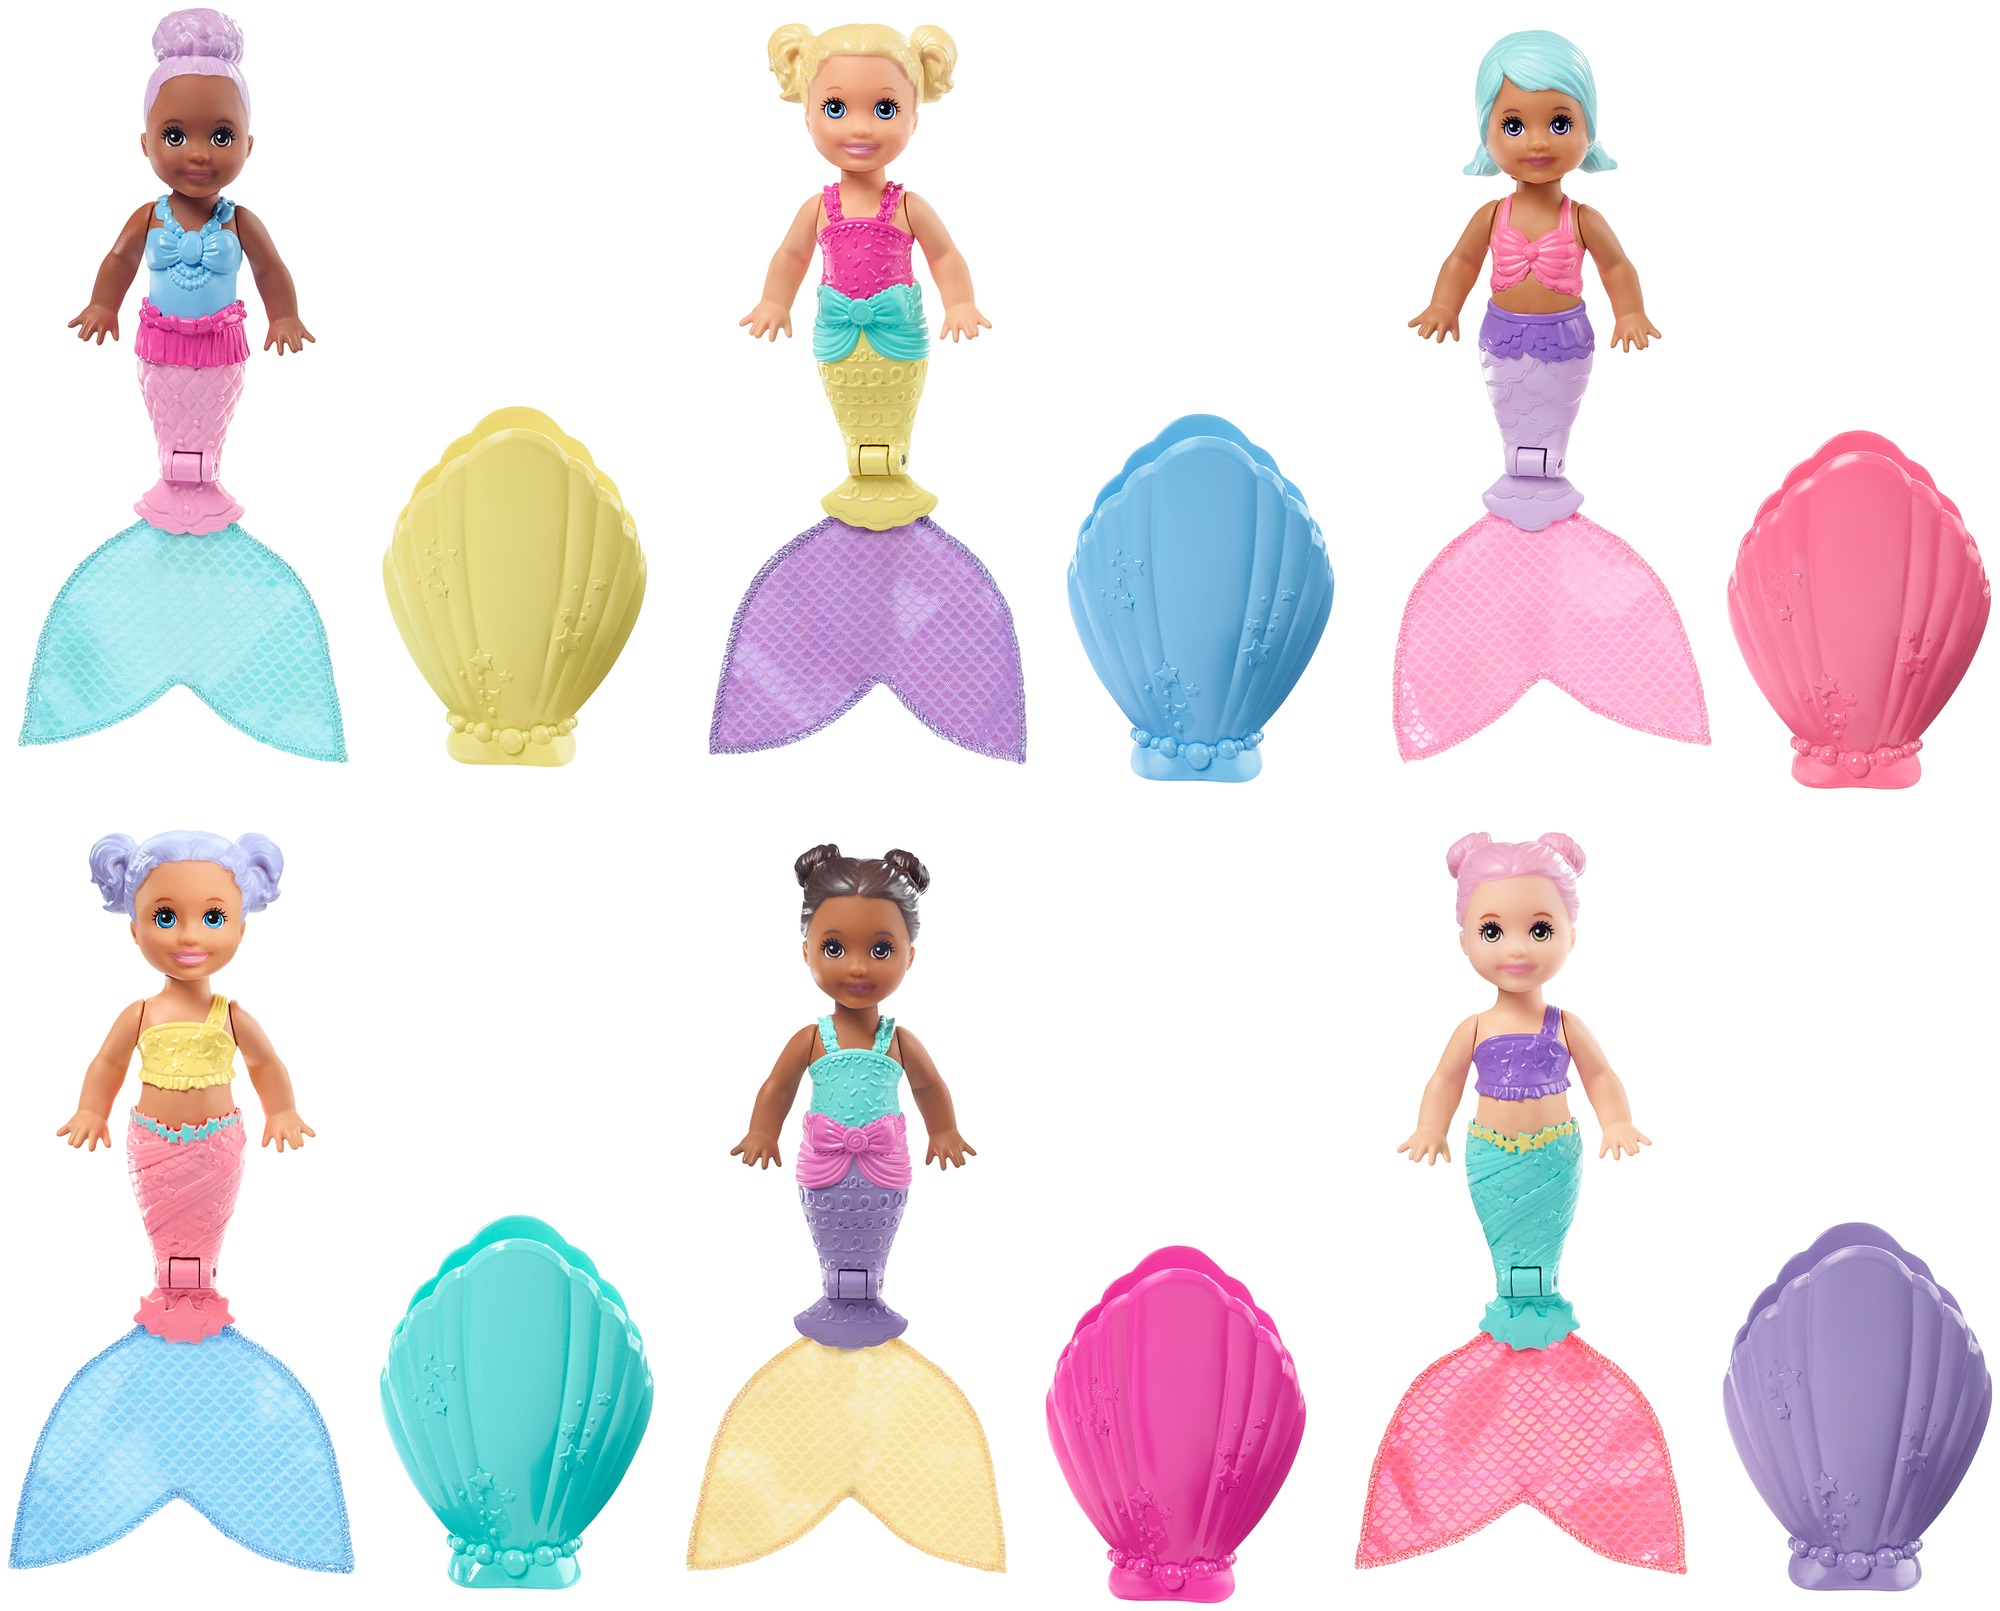 Accountant Make clear Agricultural Mattel Barbie Dreamtopia Blind Pack surprise Mermaid Dolls